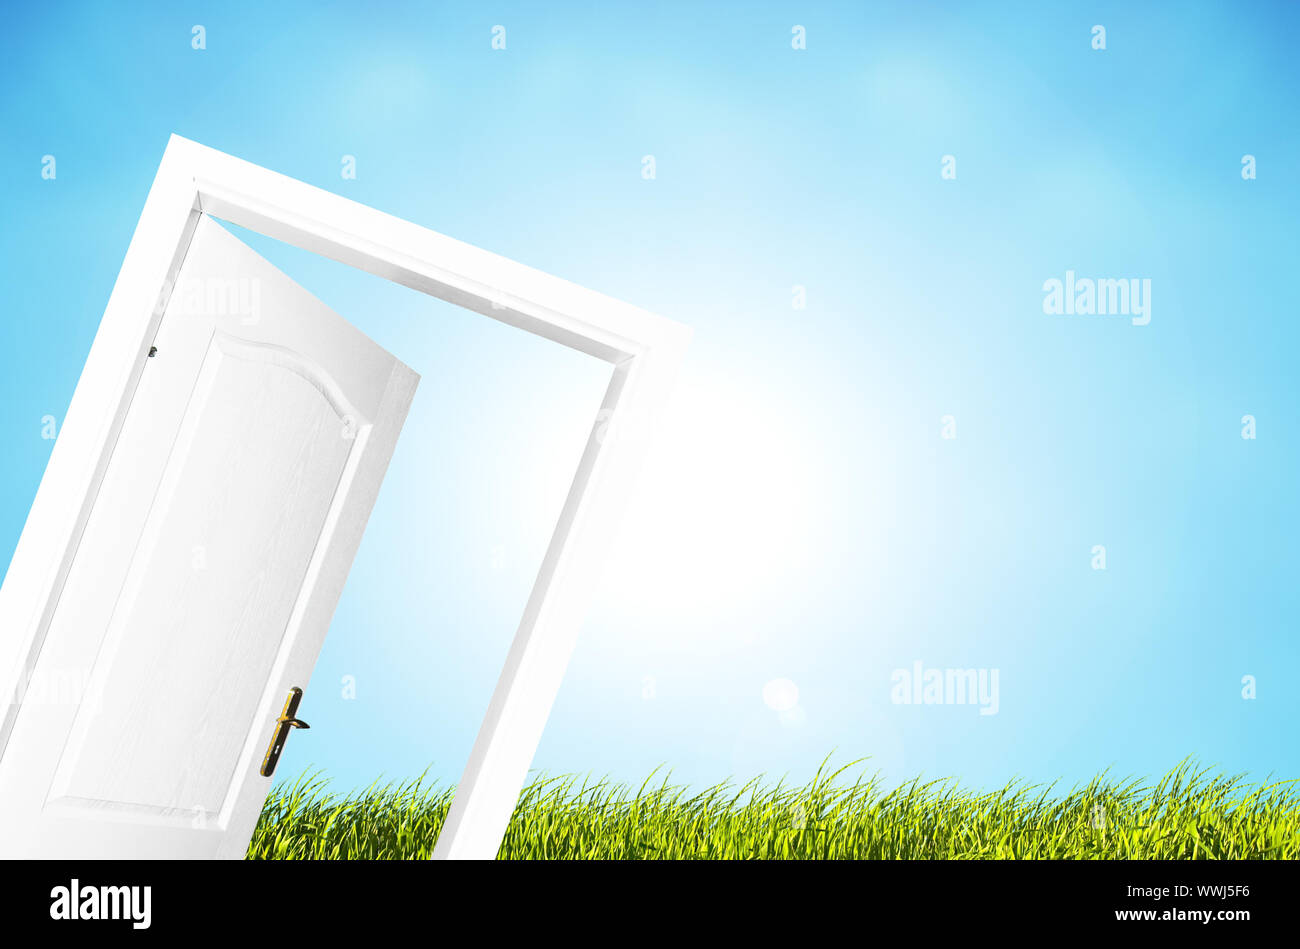 Door to new world. Easy editable image. Stock Photo